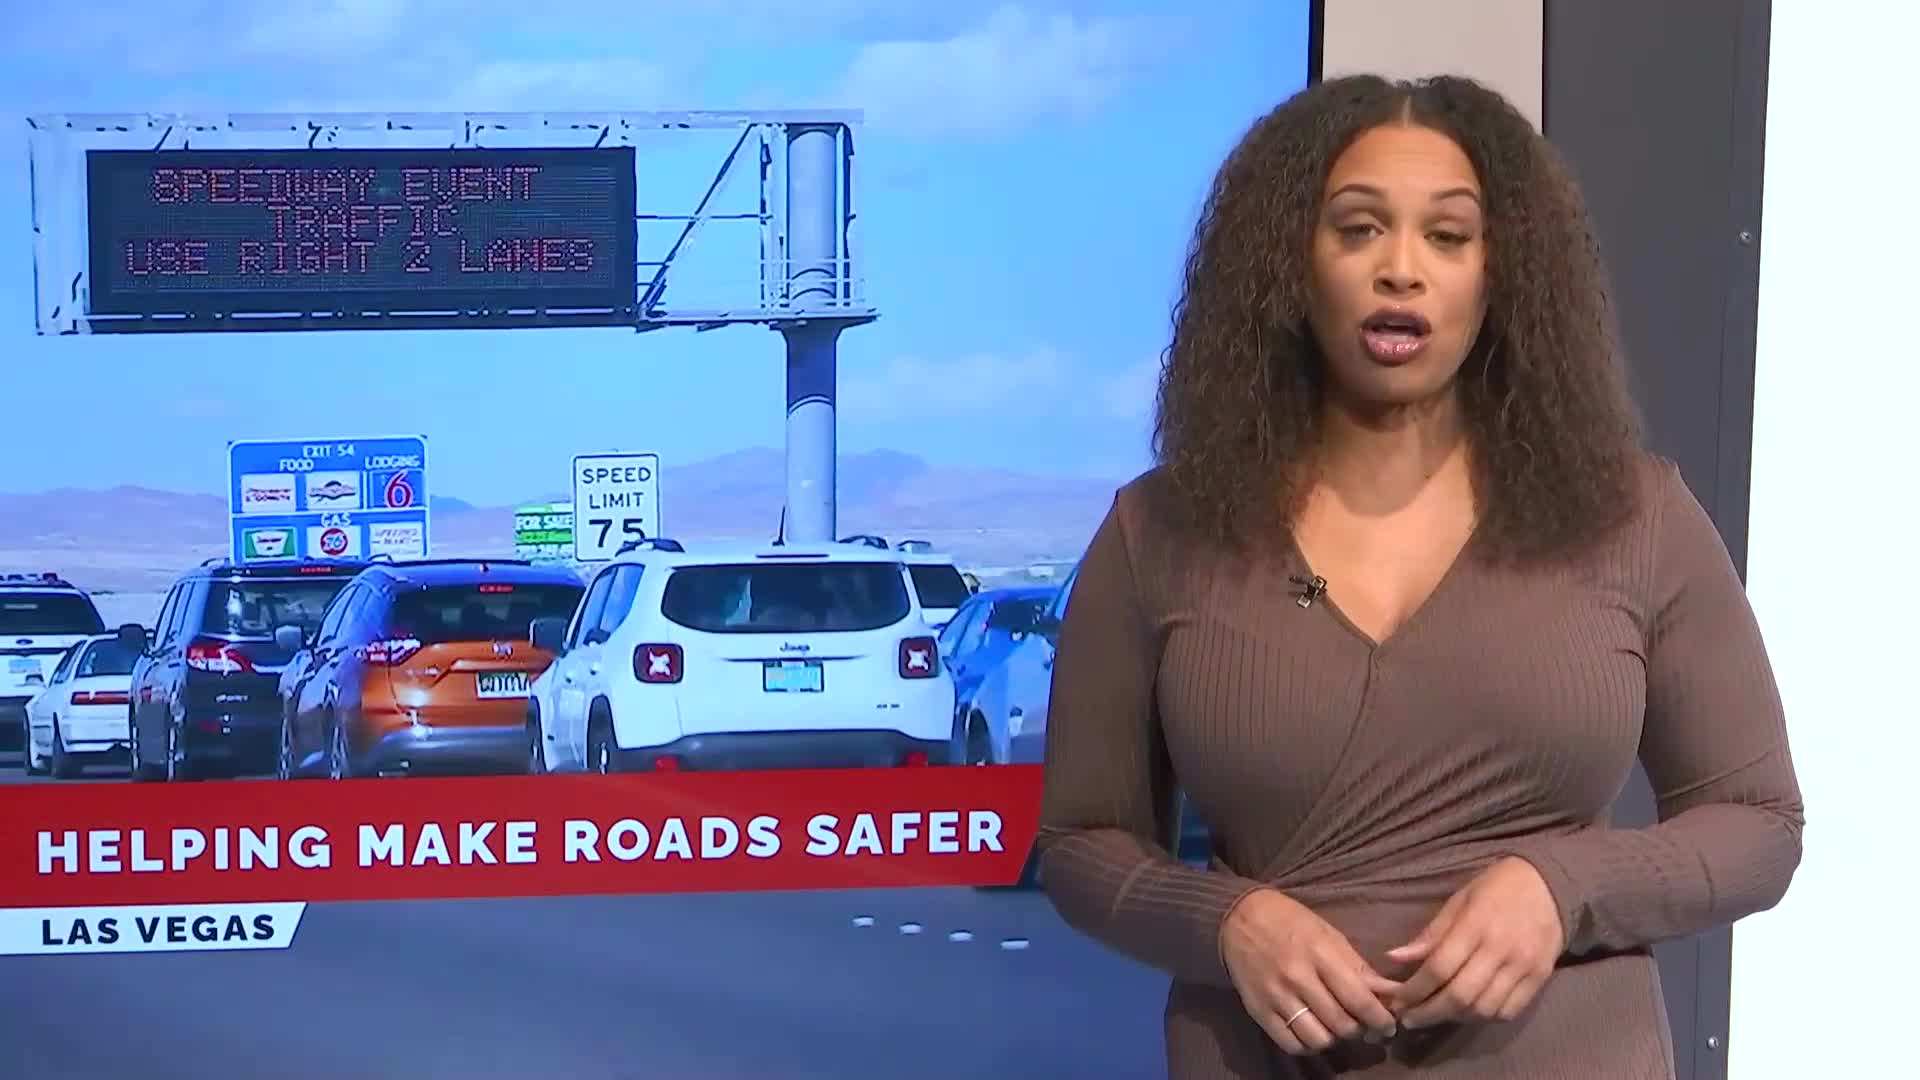 Company Seeks to Make Roads Safer